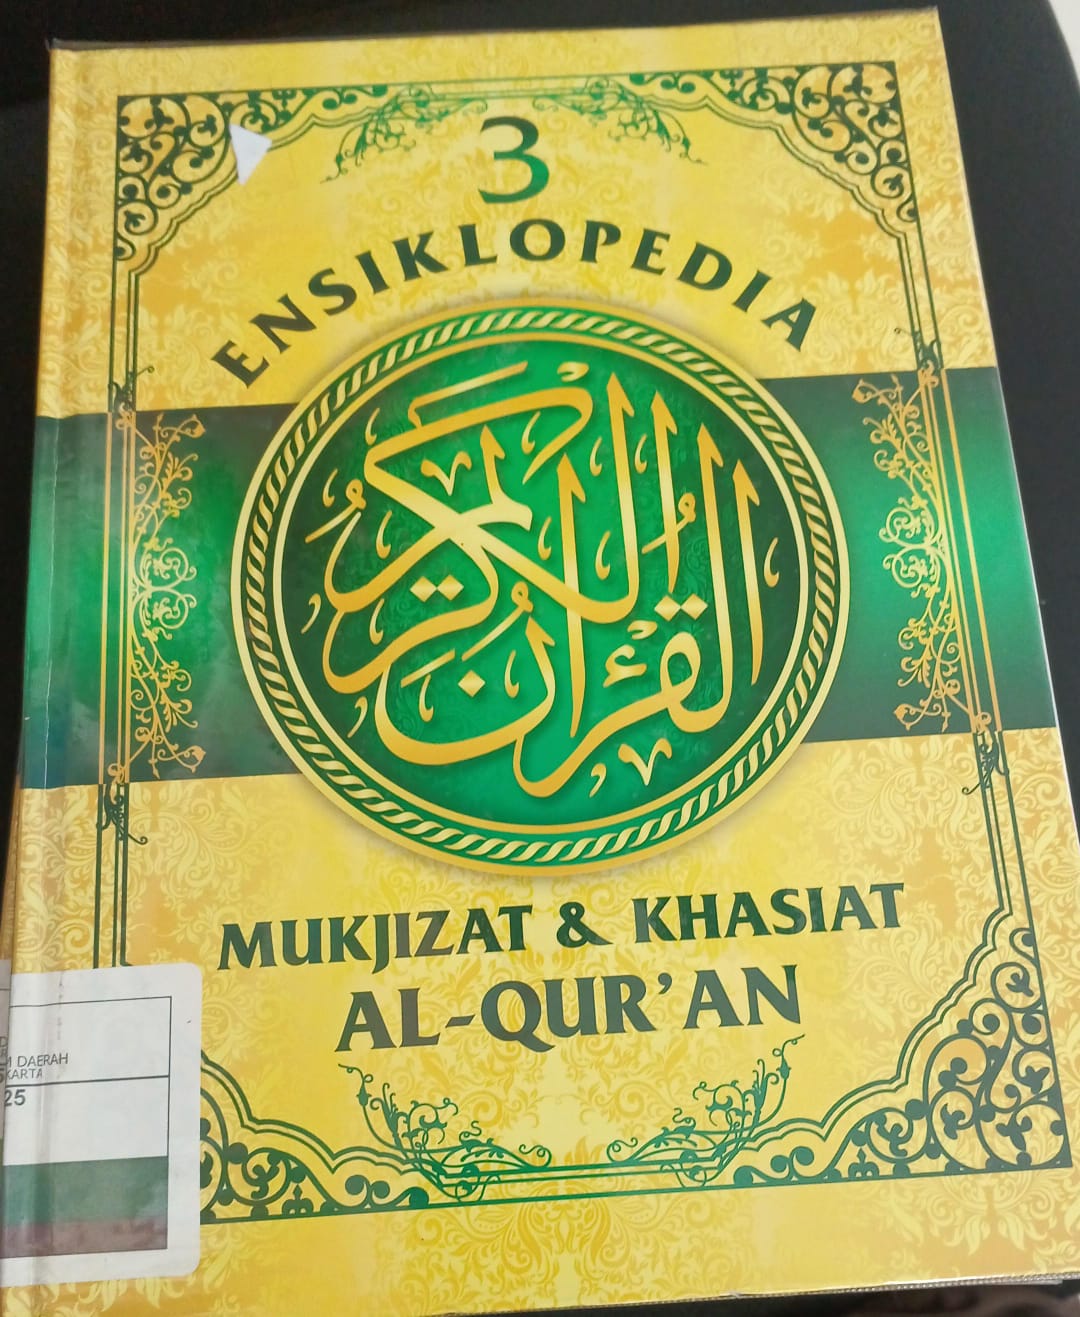 Ensiklopedia mukjizat dan khasiat al-qur'an jilid 3